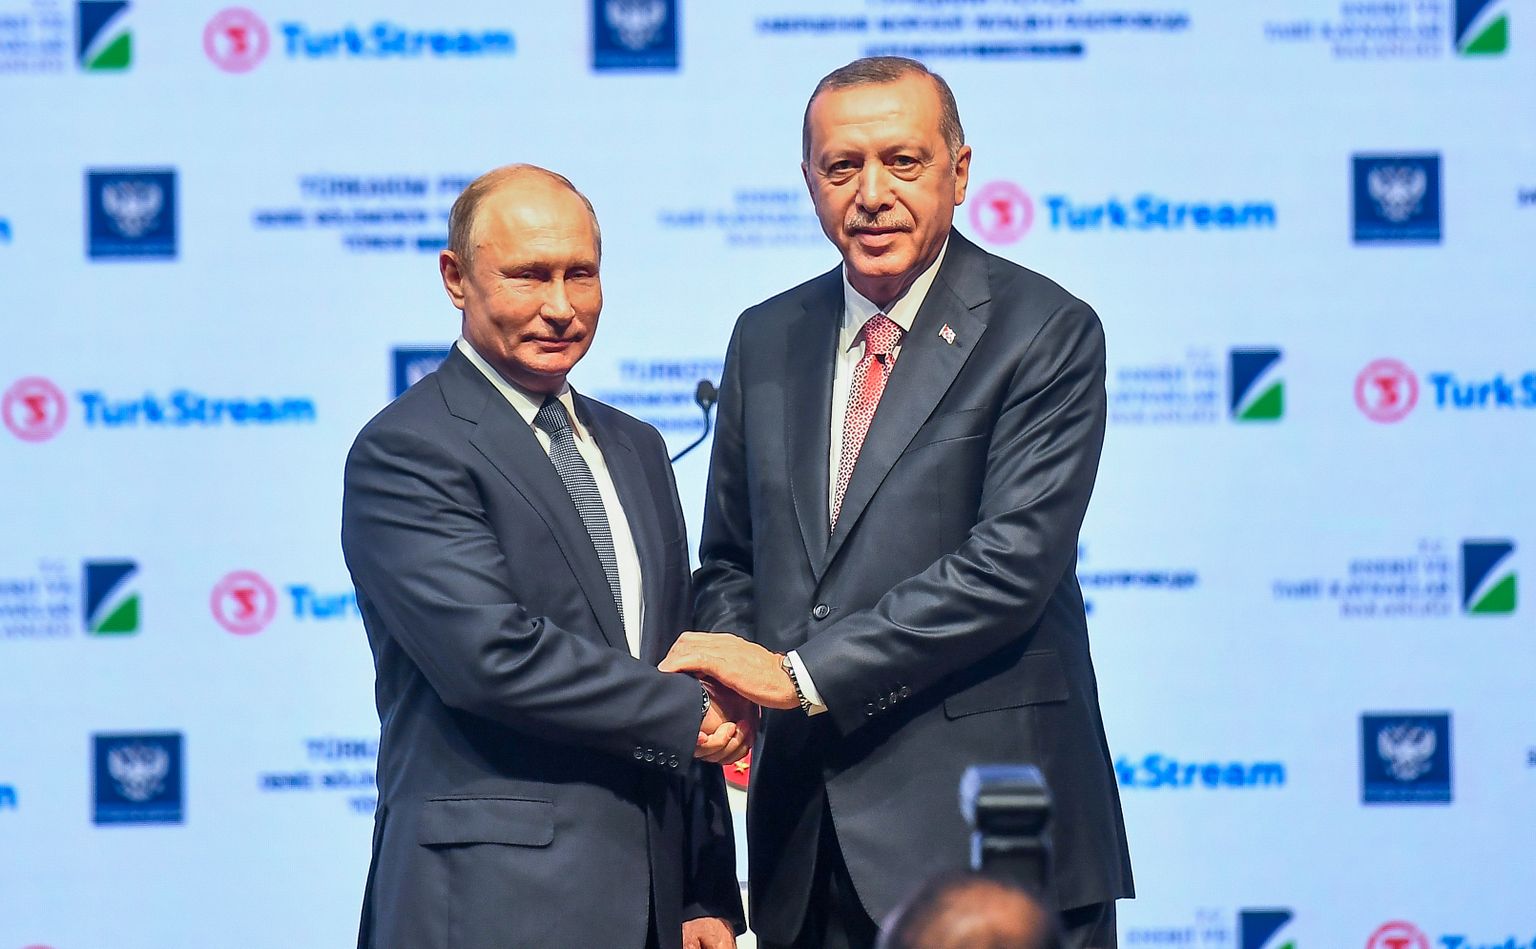 War criminal Vladimir Putin and Turkish President Recep Tayyip Erdogan.